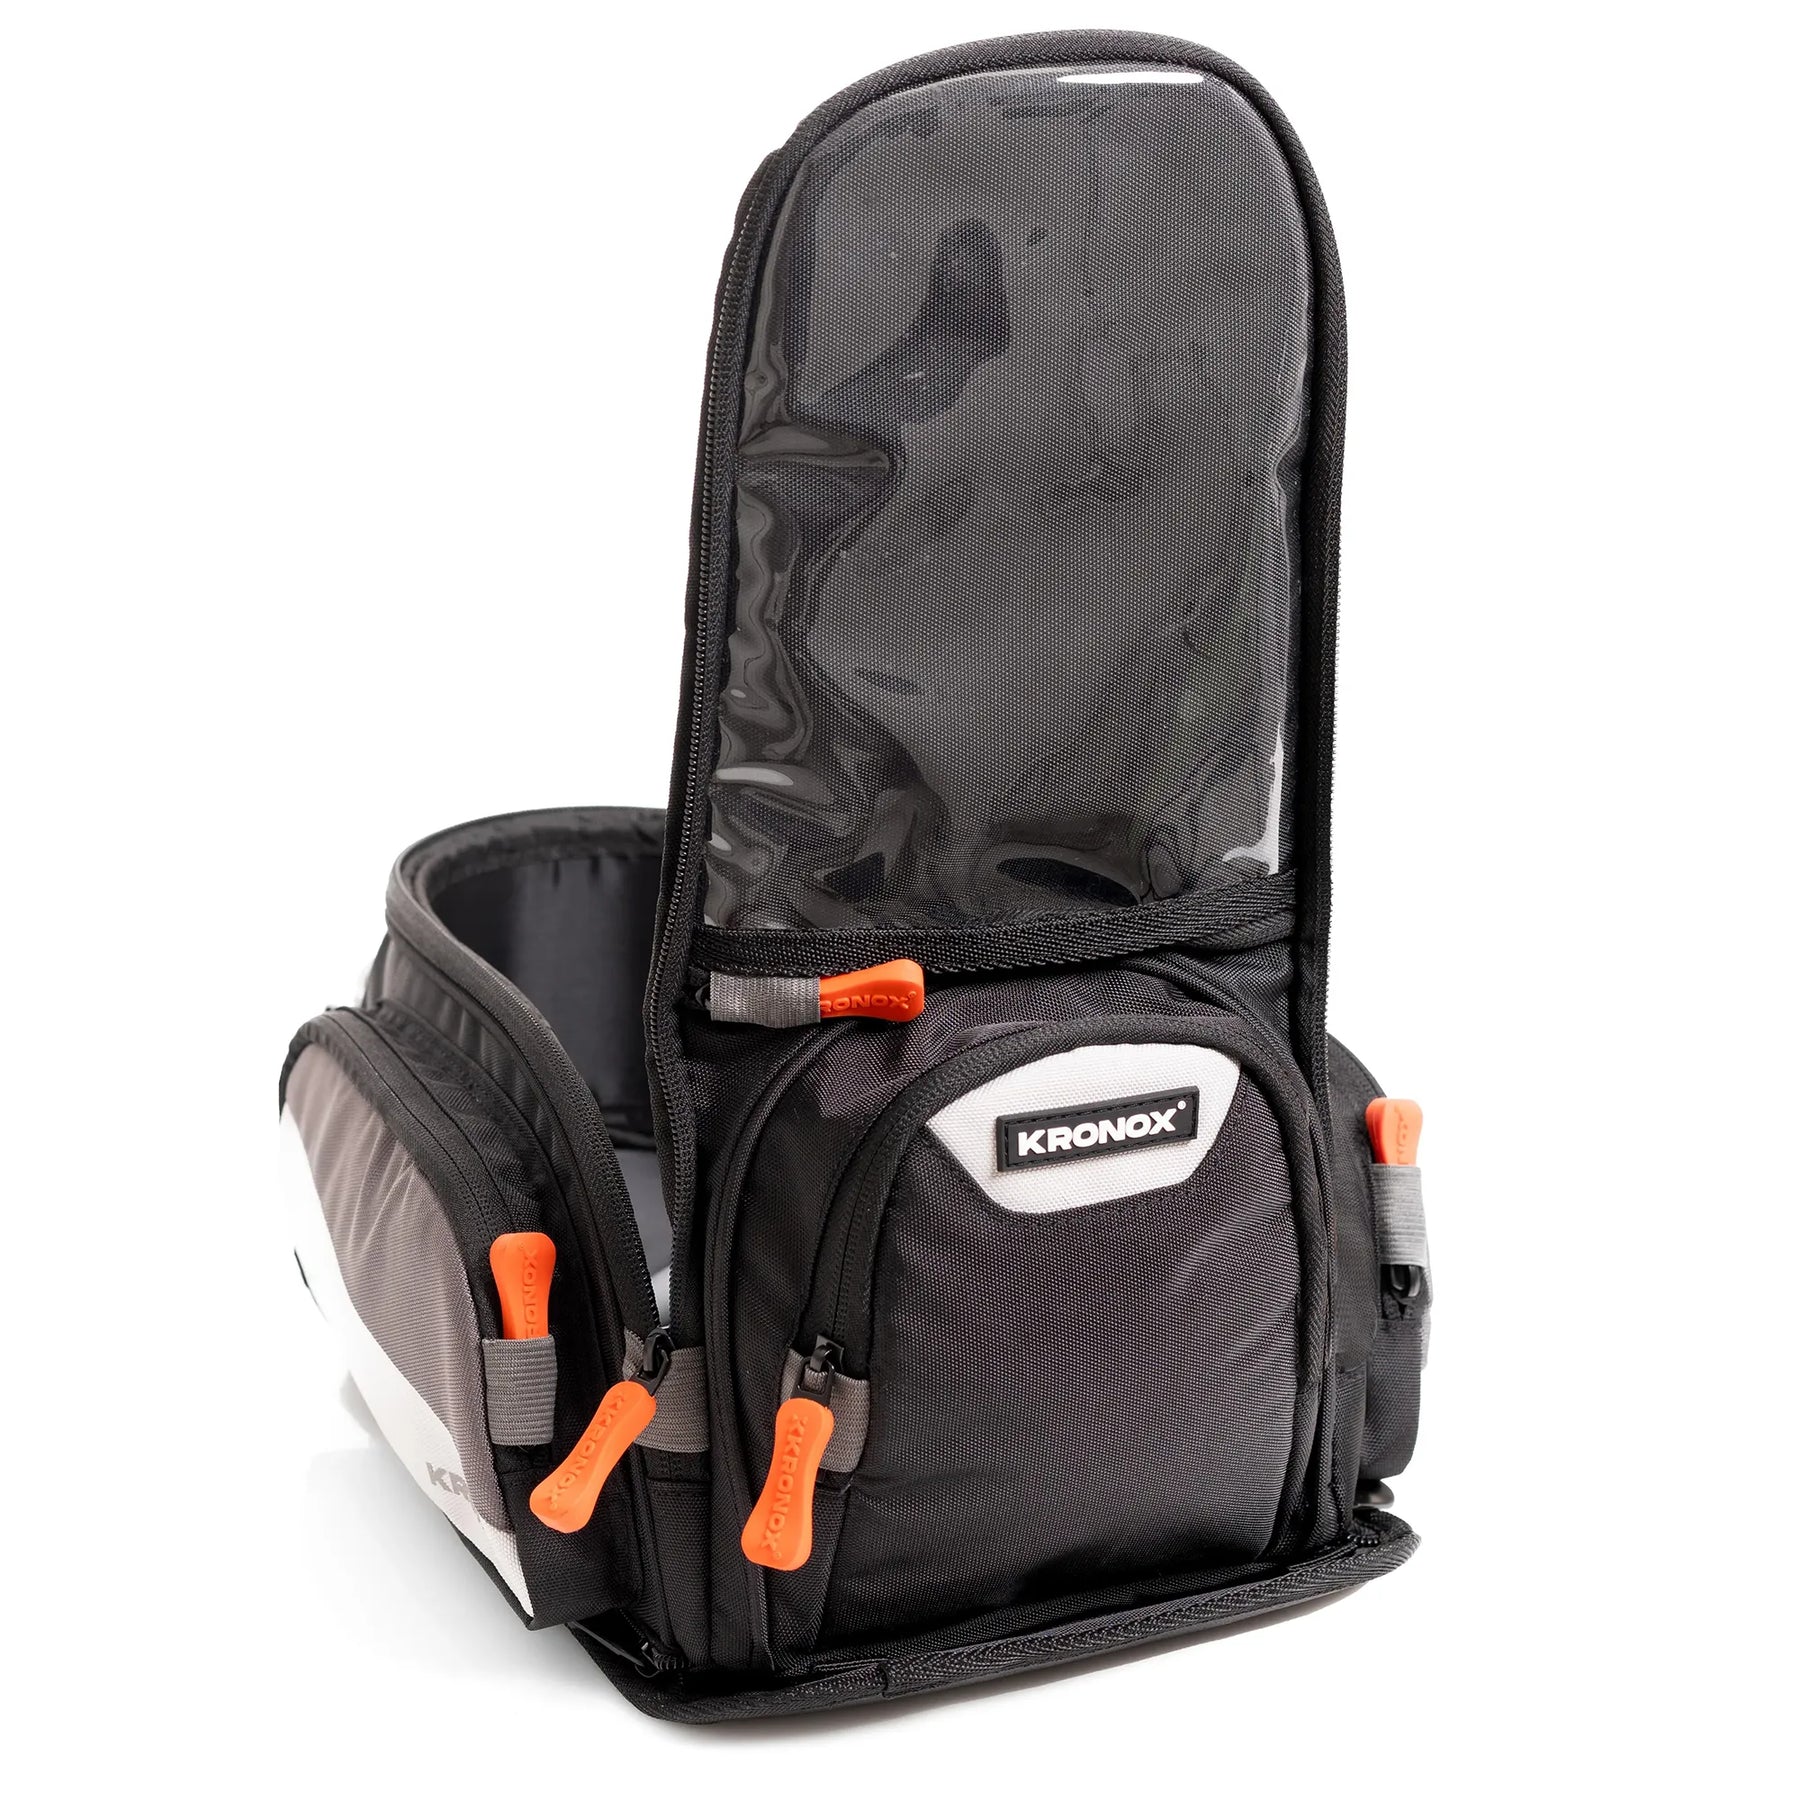 Ridgecrest Motorcycle Tank Bag | Universal Fit & GPS Compartment